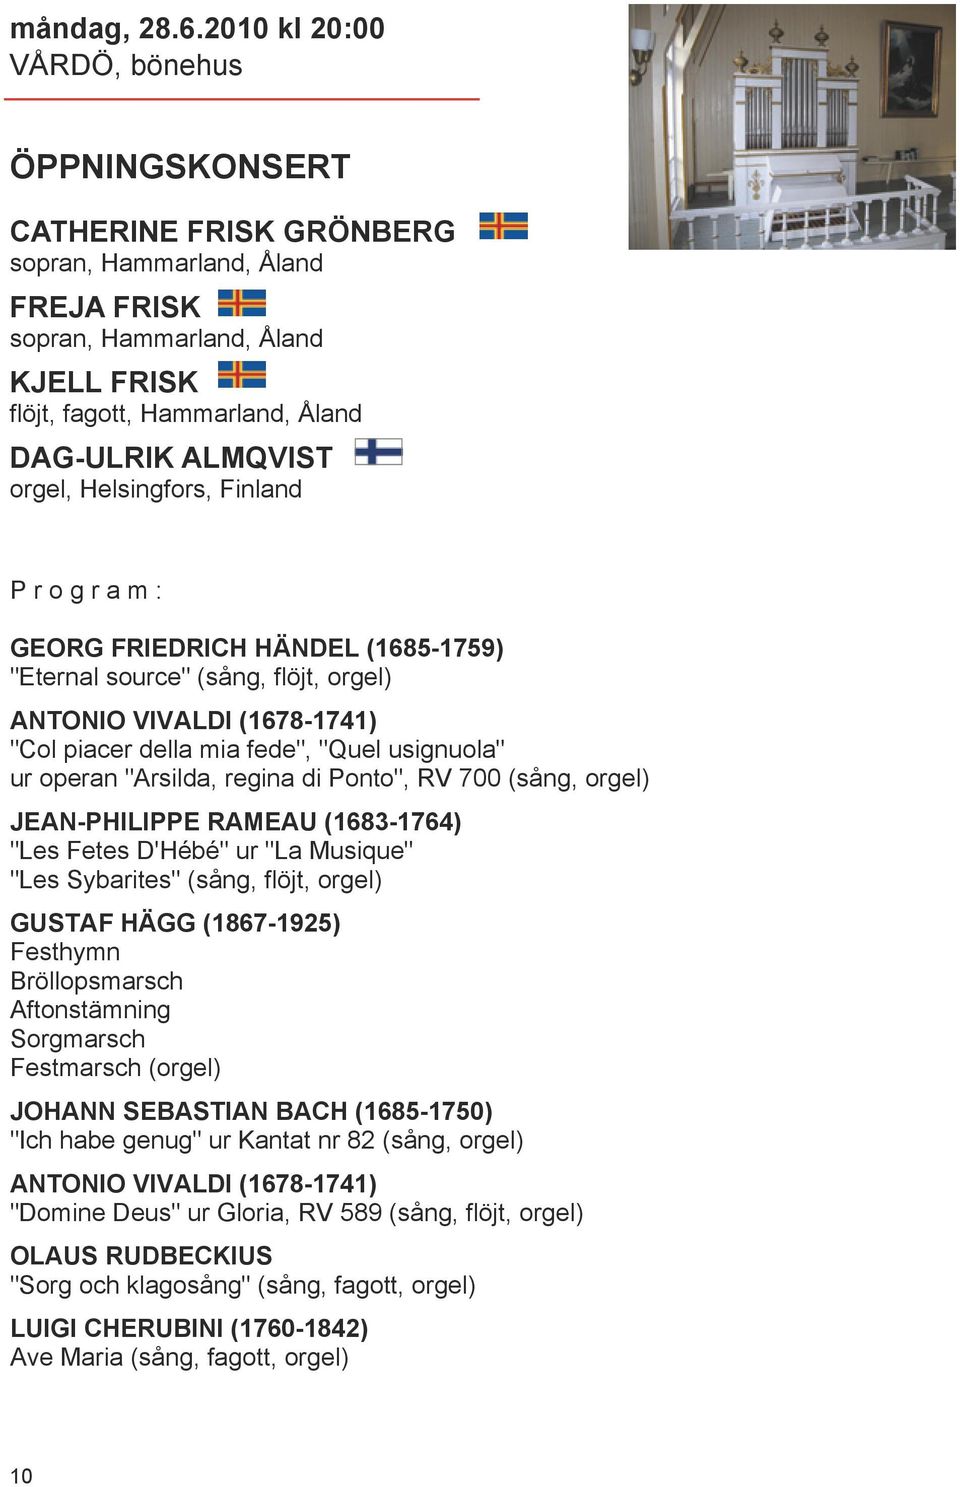 orgel, Helsingfors, Finland P r o g r a m : GEORG FRIEDRICH HÄNDEL (1685-1759) "Eternal source" (sång, flöjt, orgel) ANTONIO VIVALDI (1678-1741) "Col piacer della mia fede", "Quel usignuola" ur